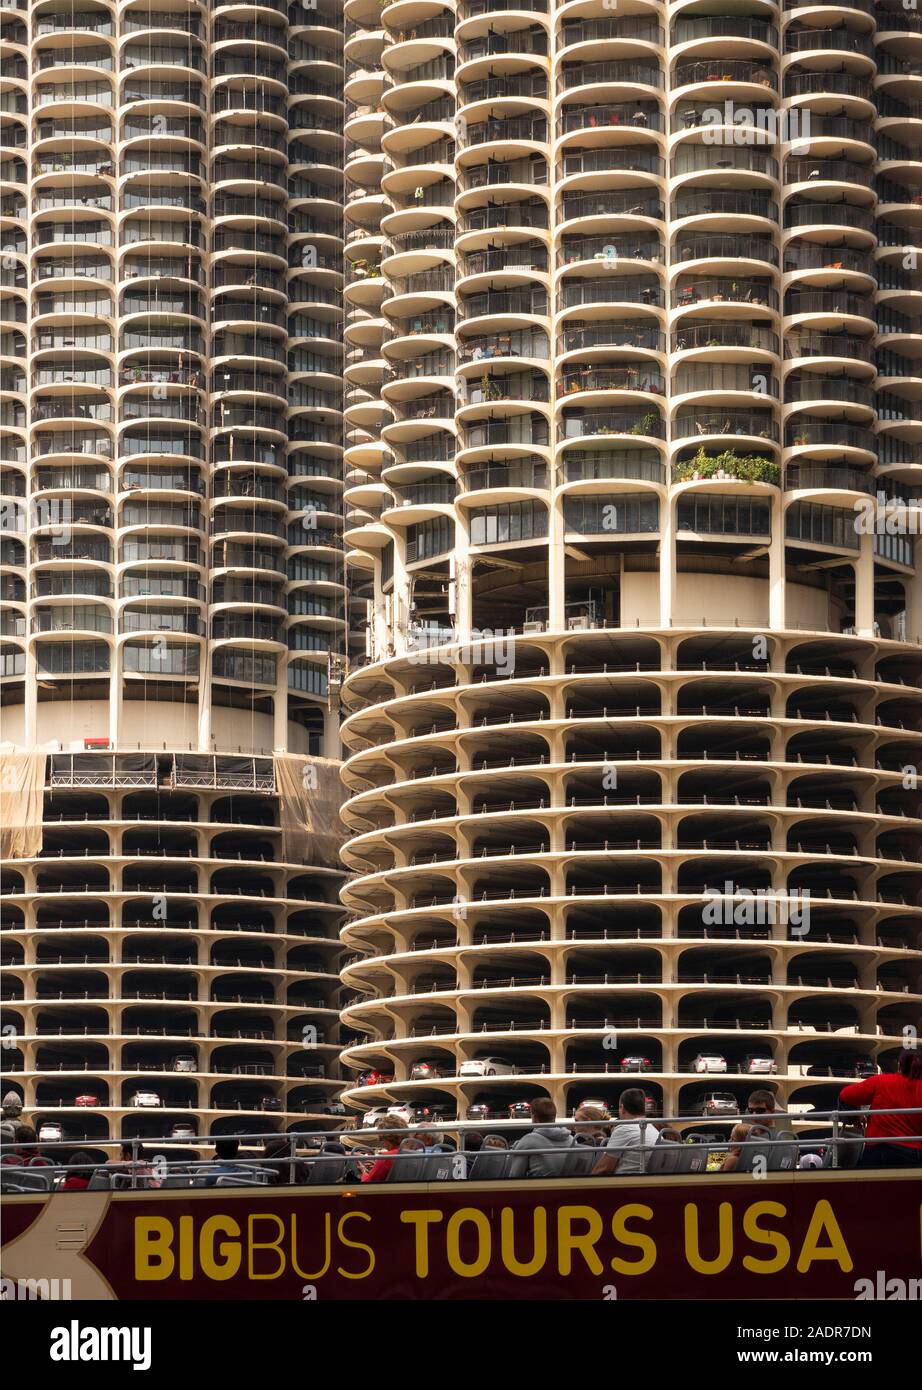 Architecture Tour - round parking Garages. KRAZY! - Picture of Chicago,  Illinois - Tripadvisor